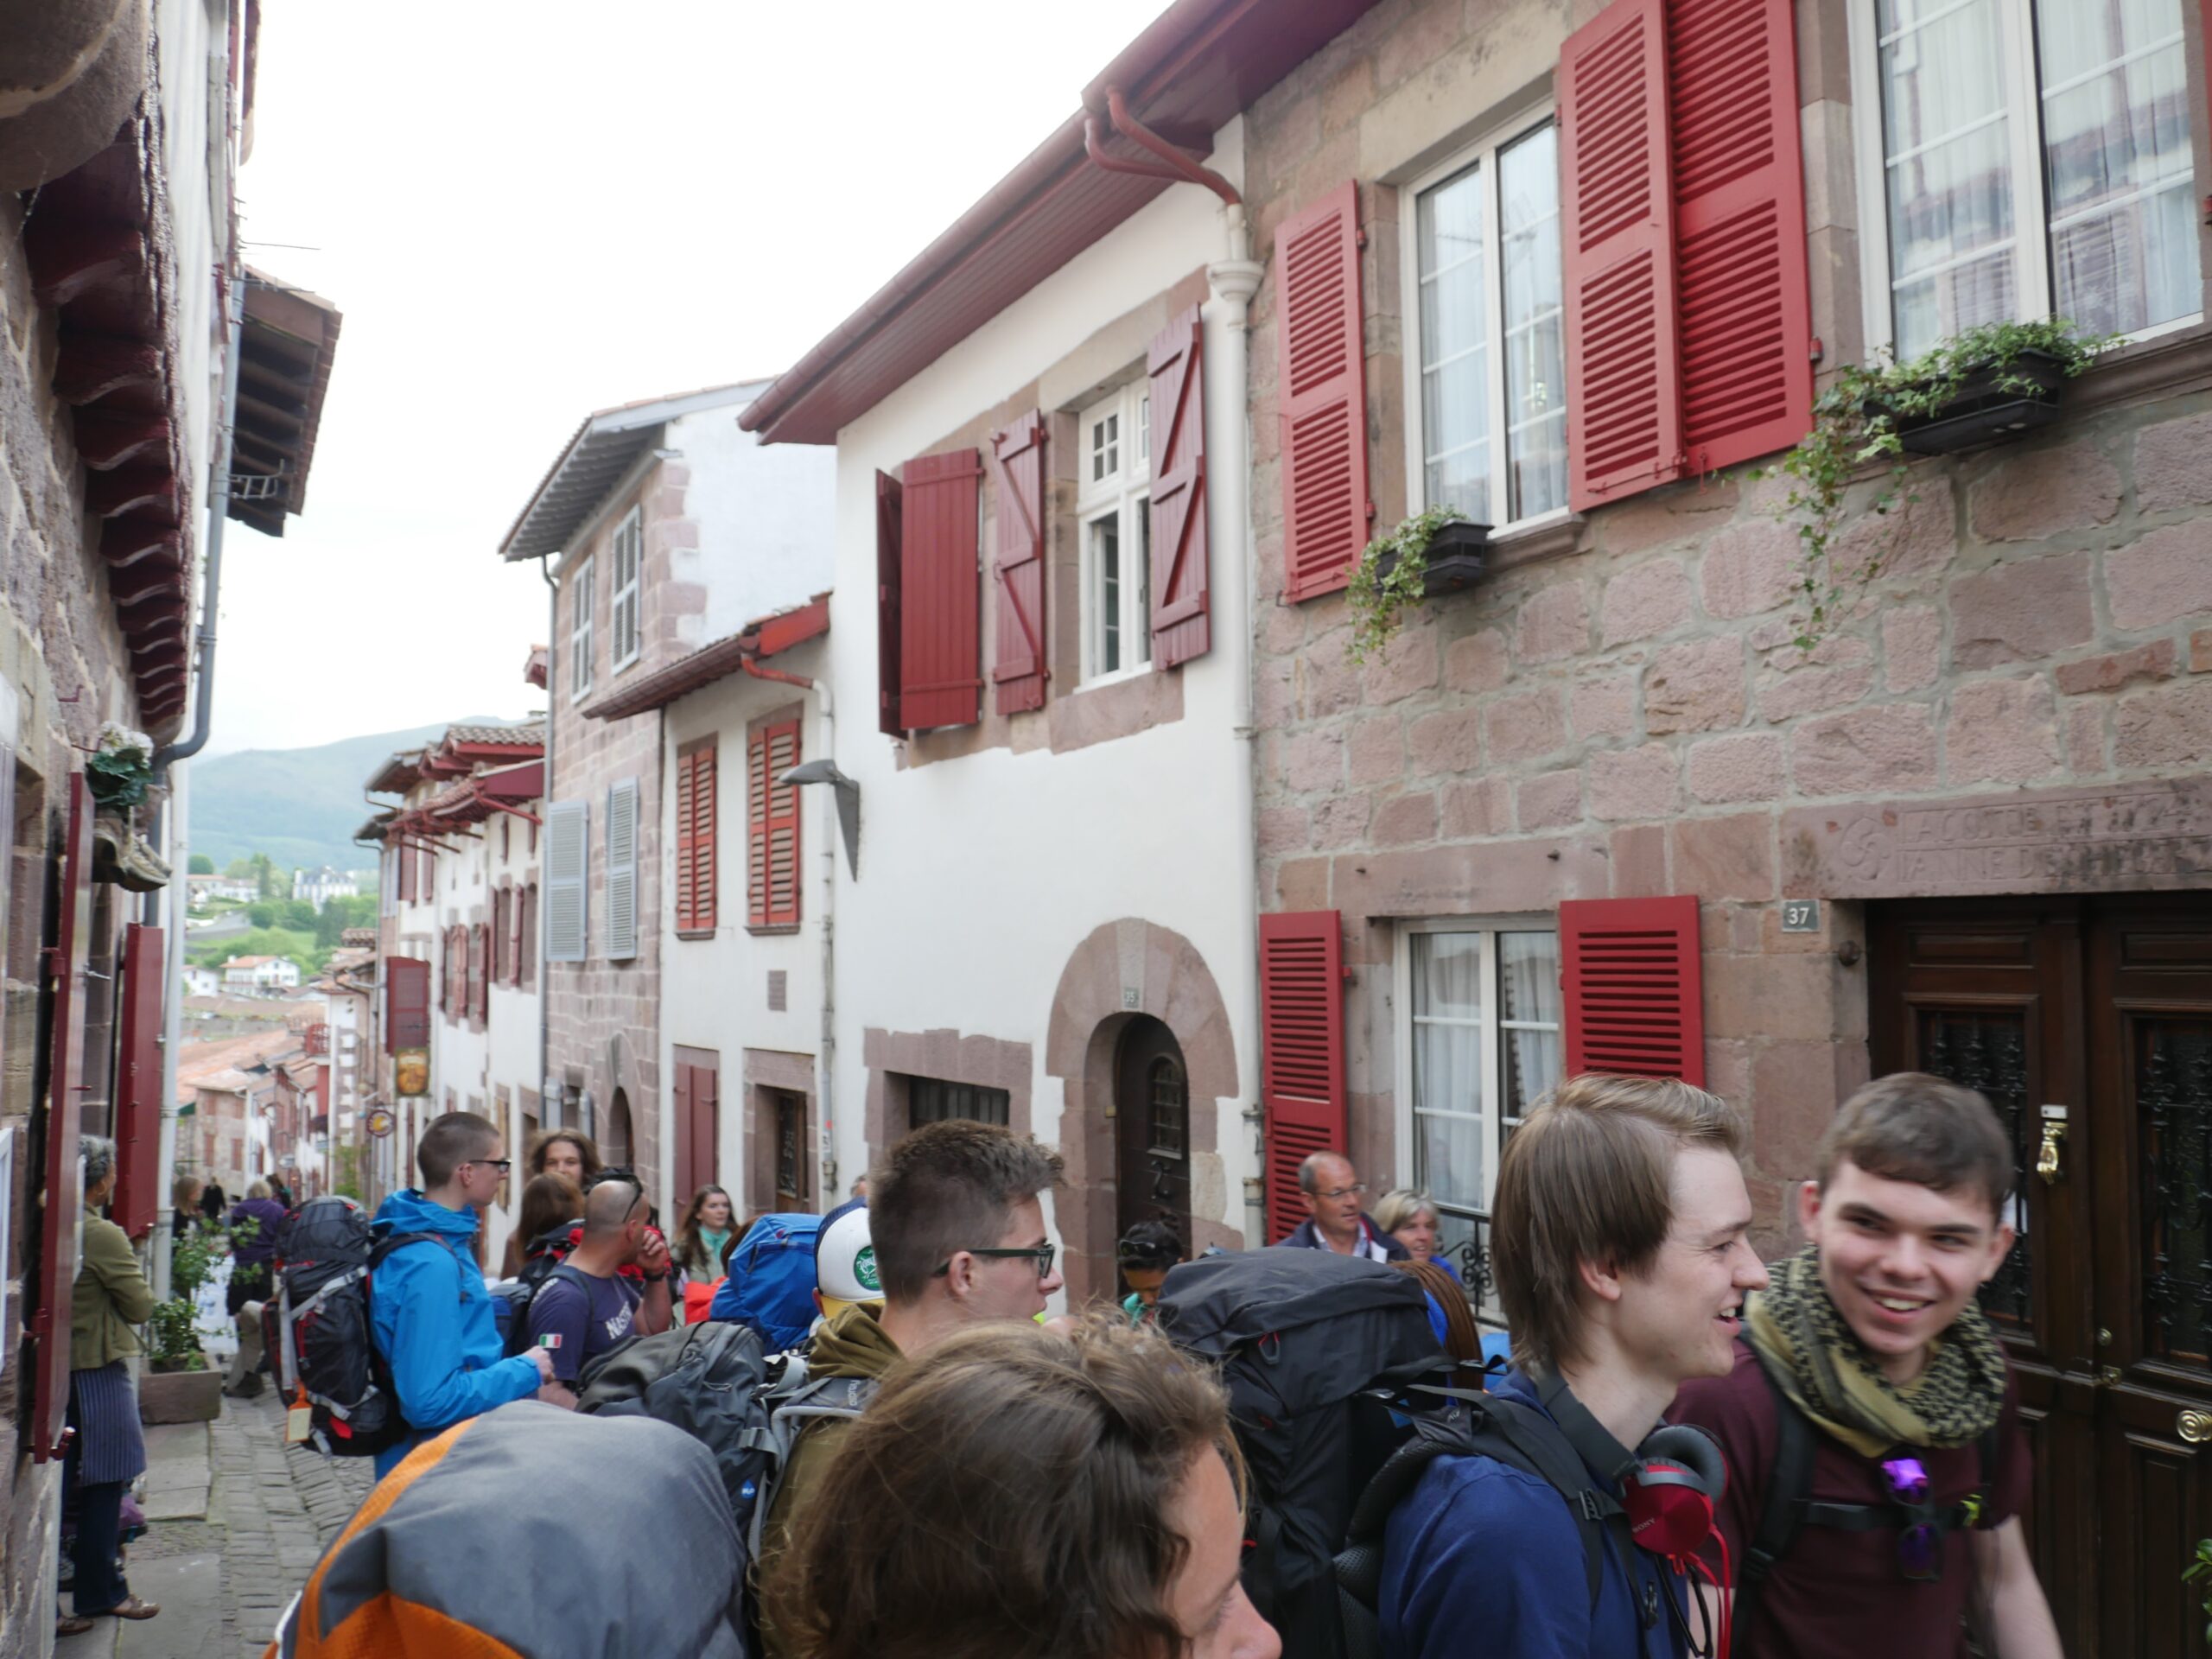 Pilgrims wait in line in Saint-Jean-Pied-de-Port, France to obtain their pilgrim&#039;s passport before beginning their trip on the Camino de Santiago.